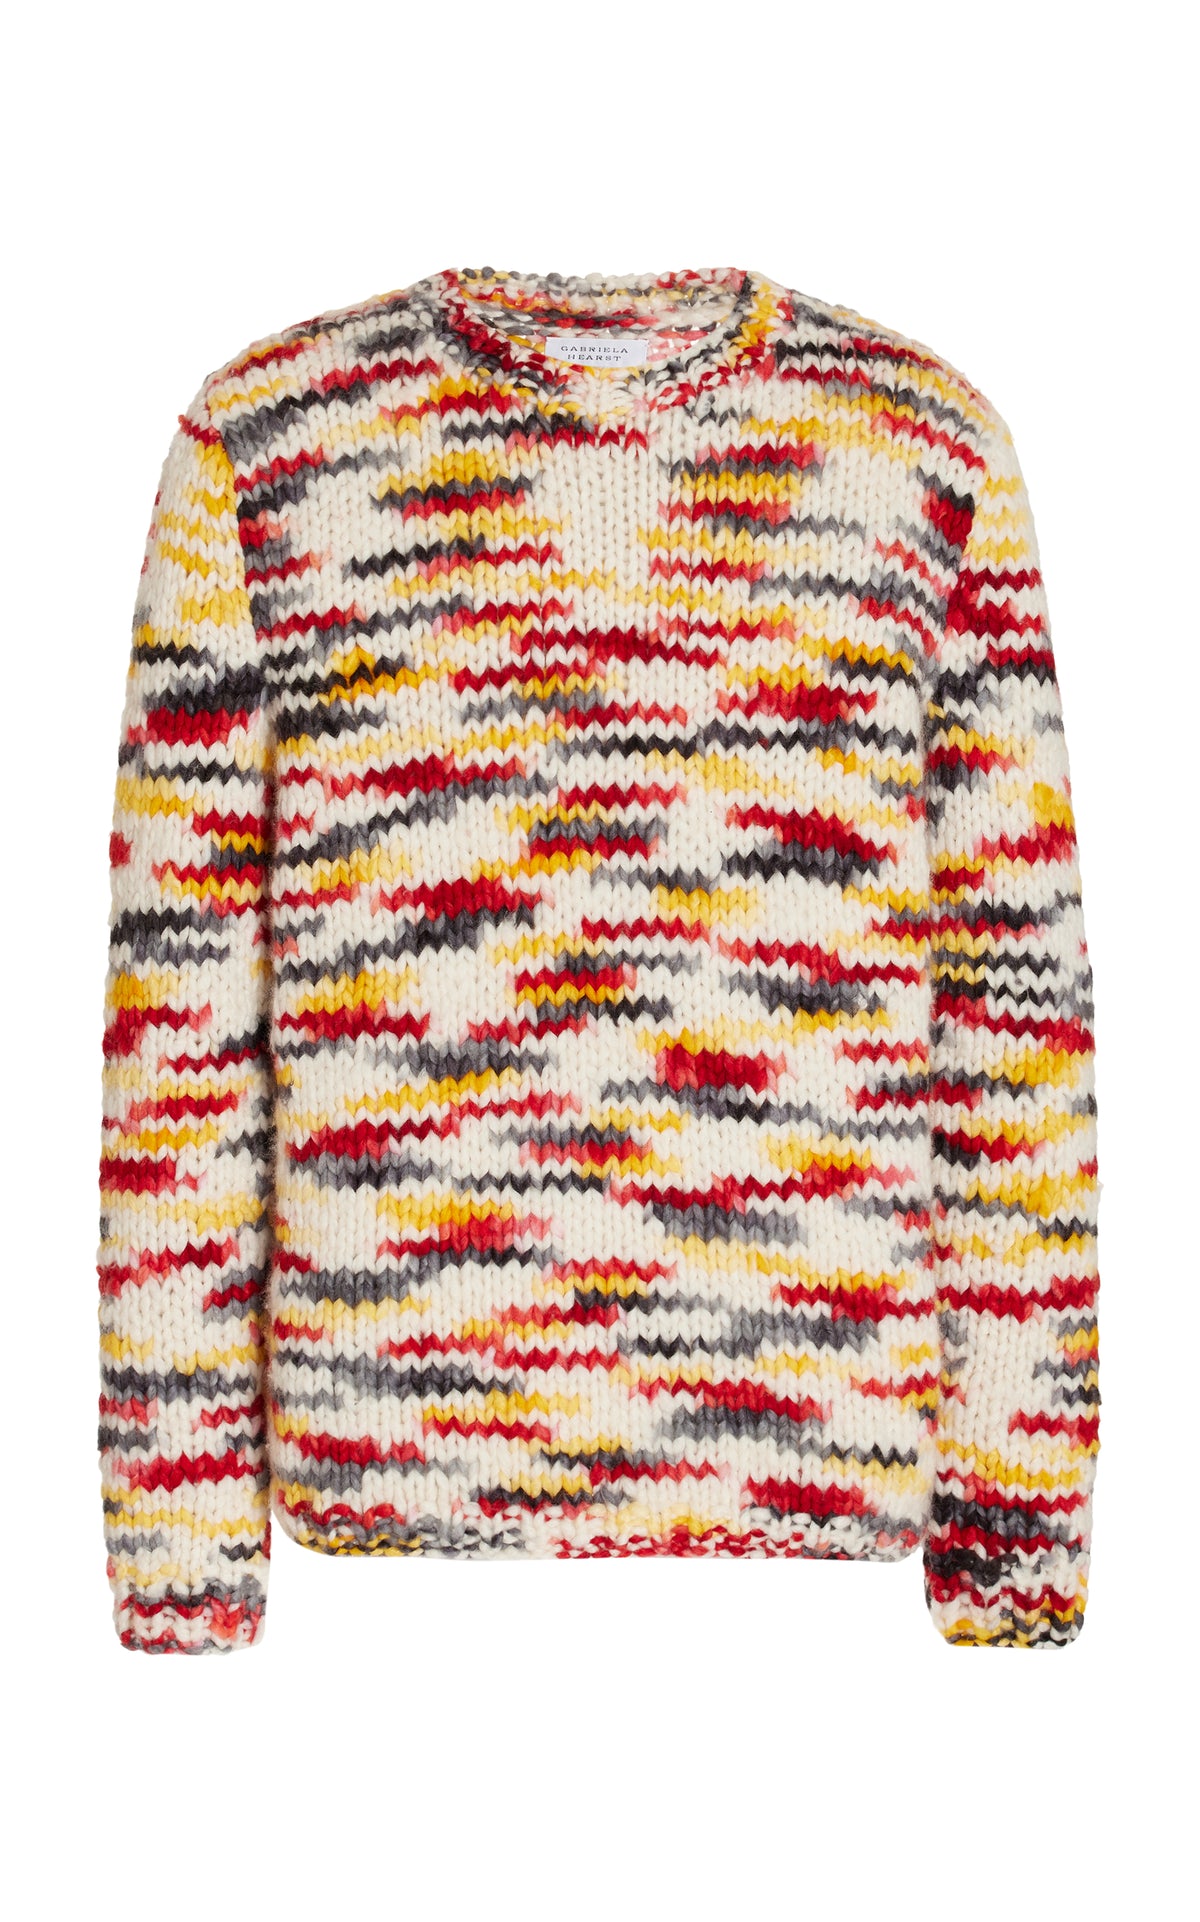 Lawrence Space Dye Knit Sweater in Fire Multi Welfat Cashmere